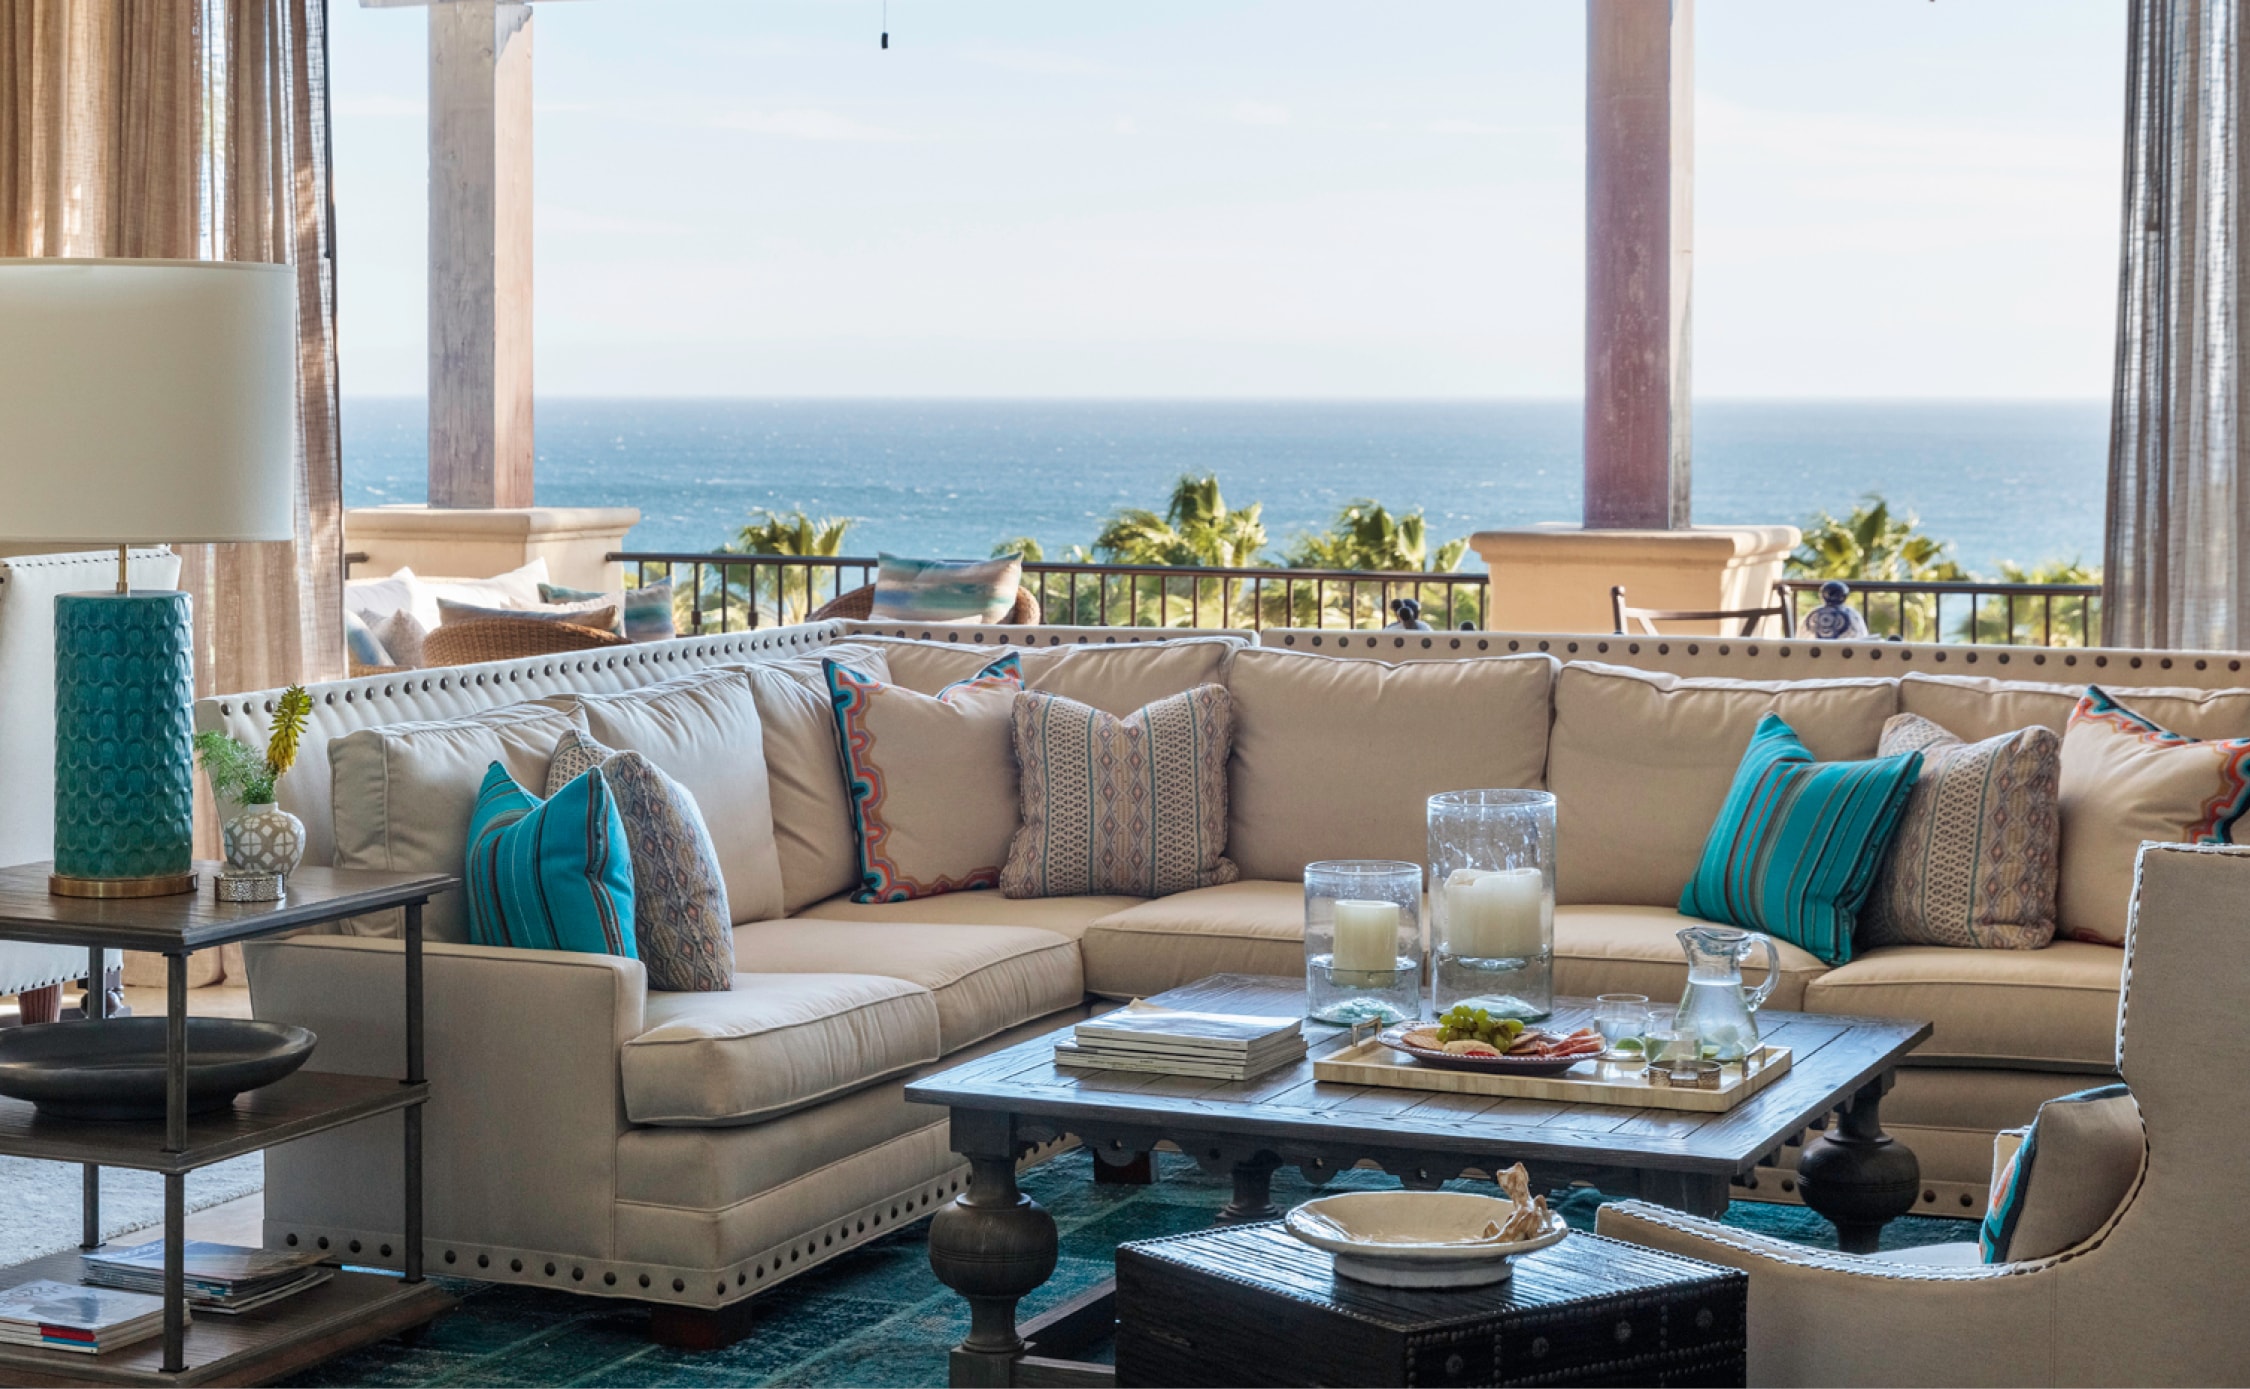 coastal residential interior design in the portfolio of j banks design group includes luxury resorts